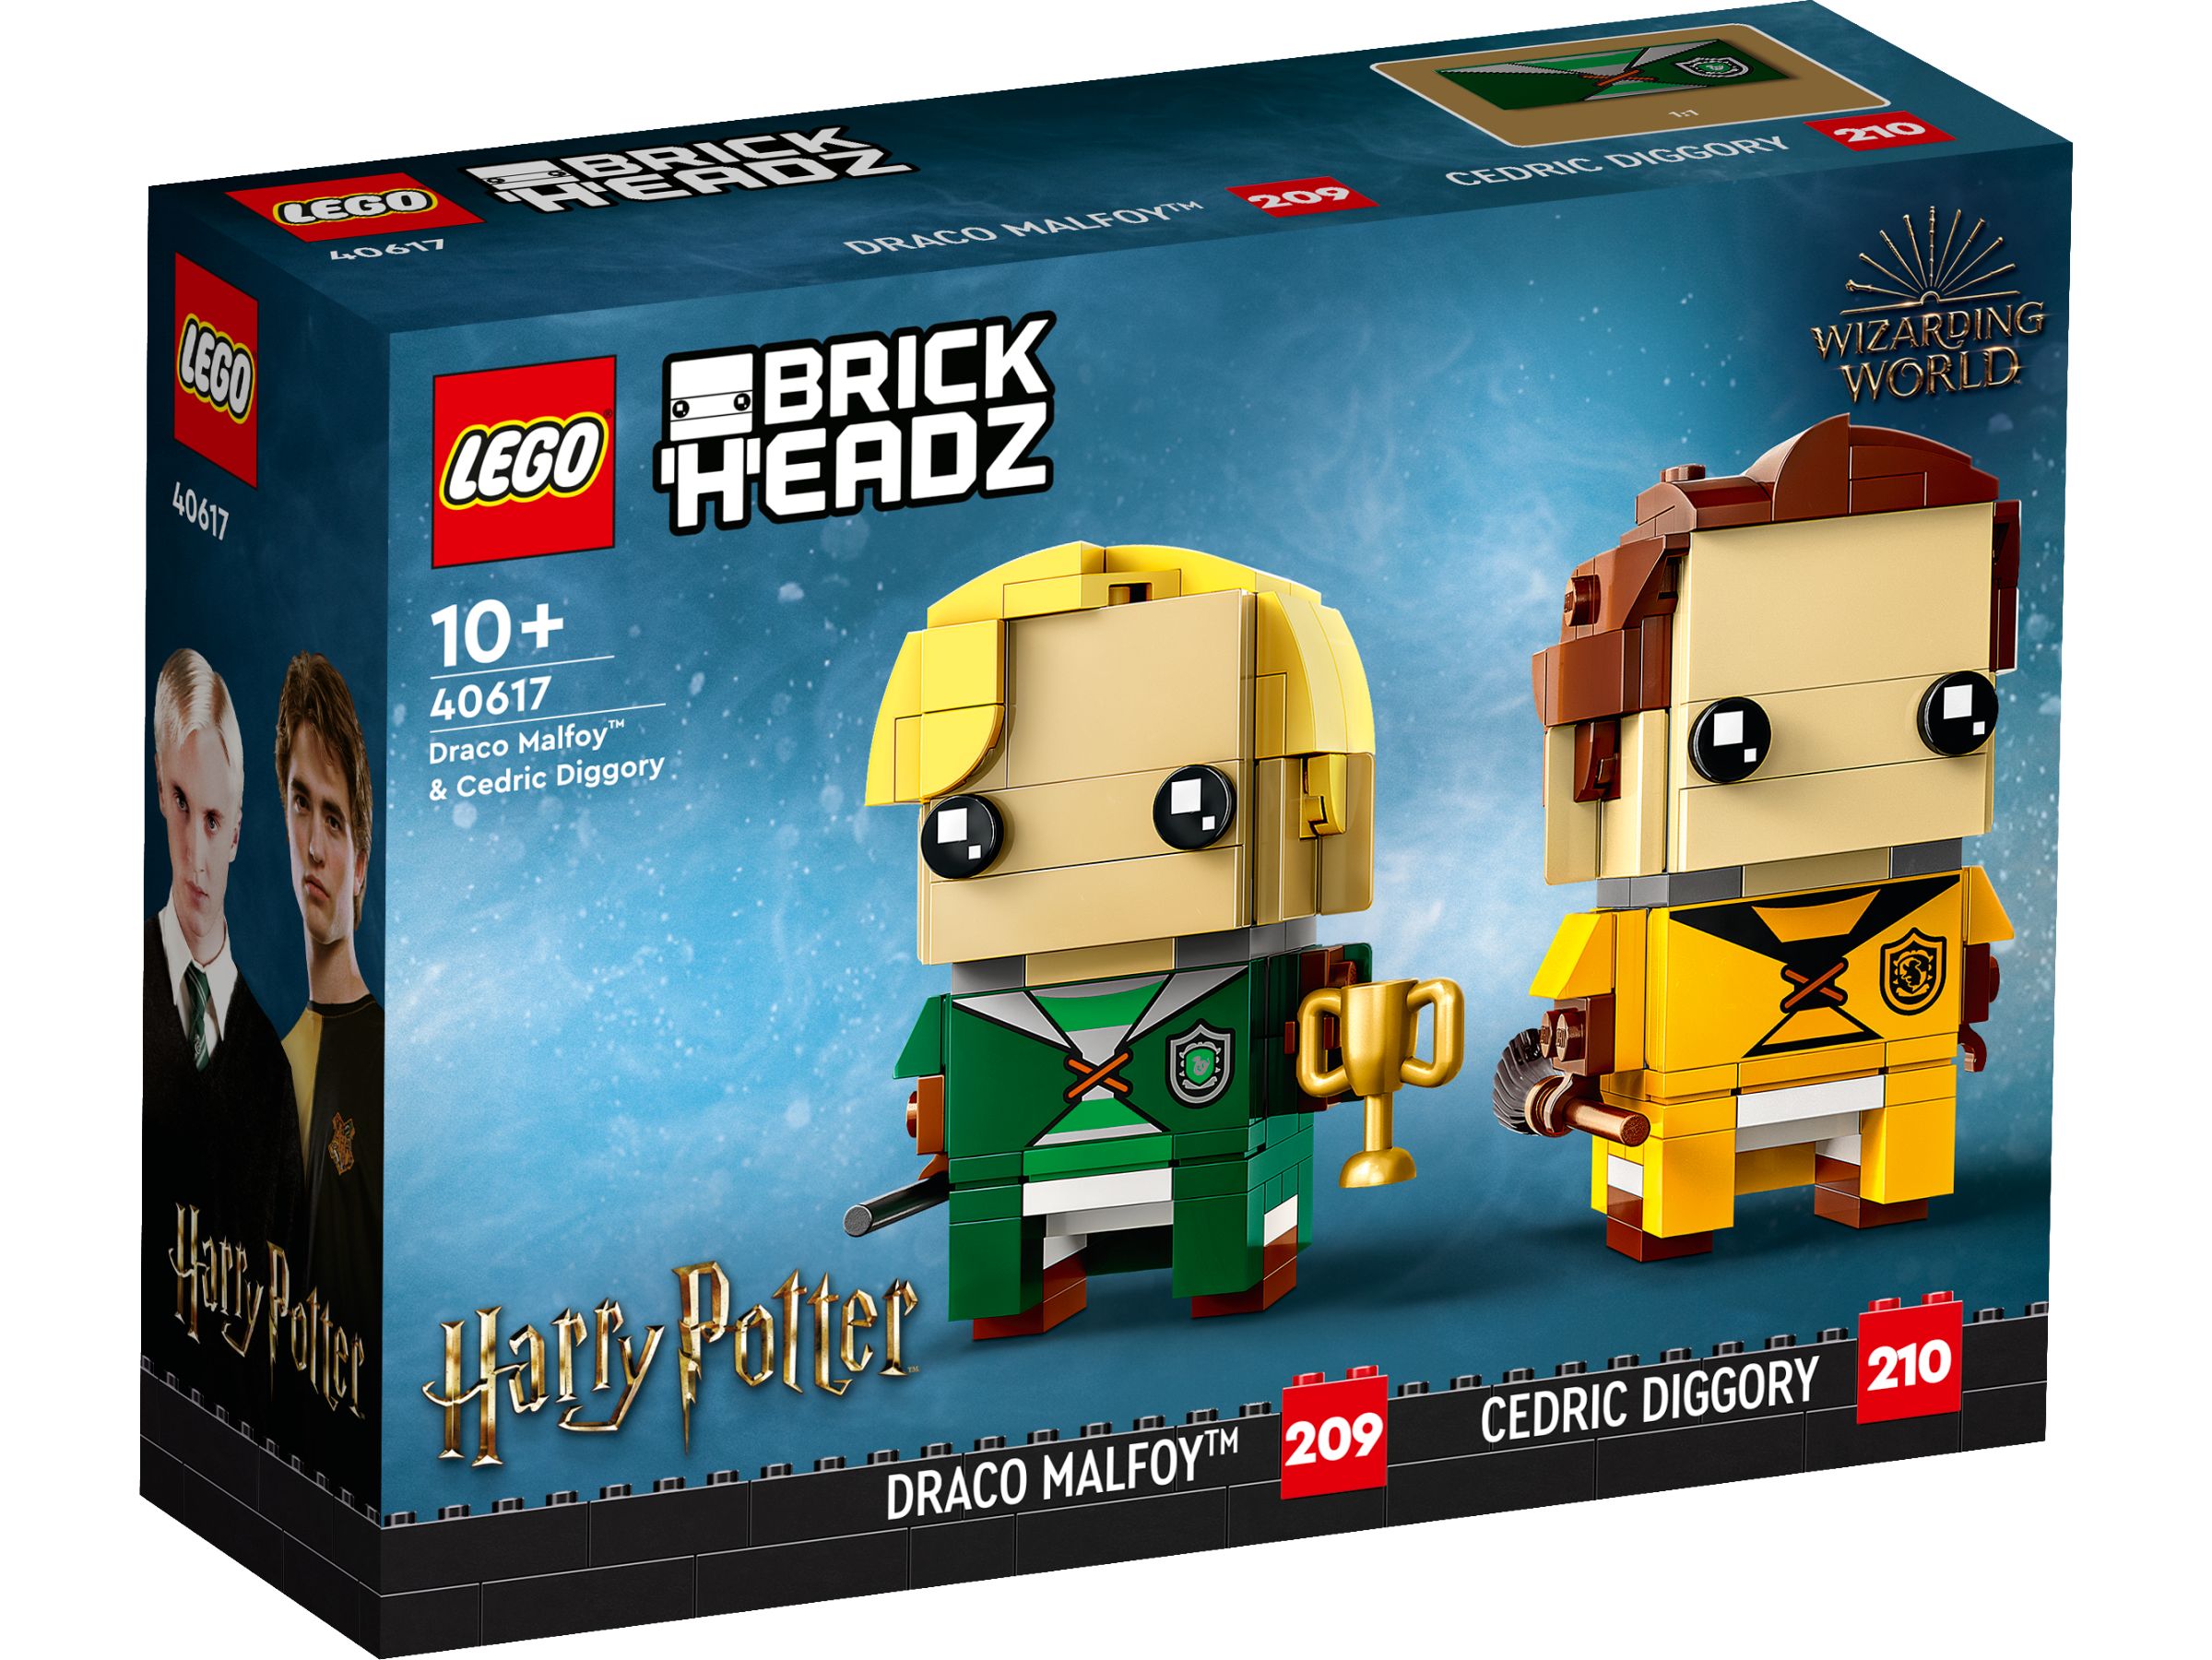 LEGO BrickHeadz 40617 Draco Malfoy™ & Cedric Diggory LEGO_40617_Box1_v29.jpg